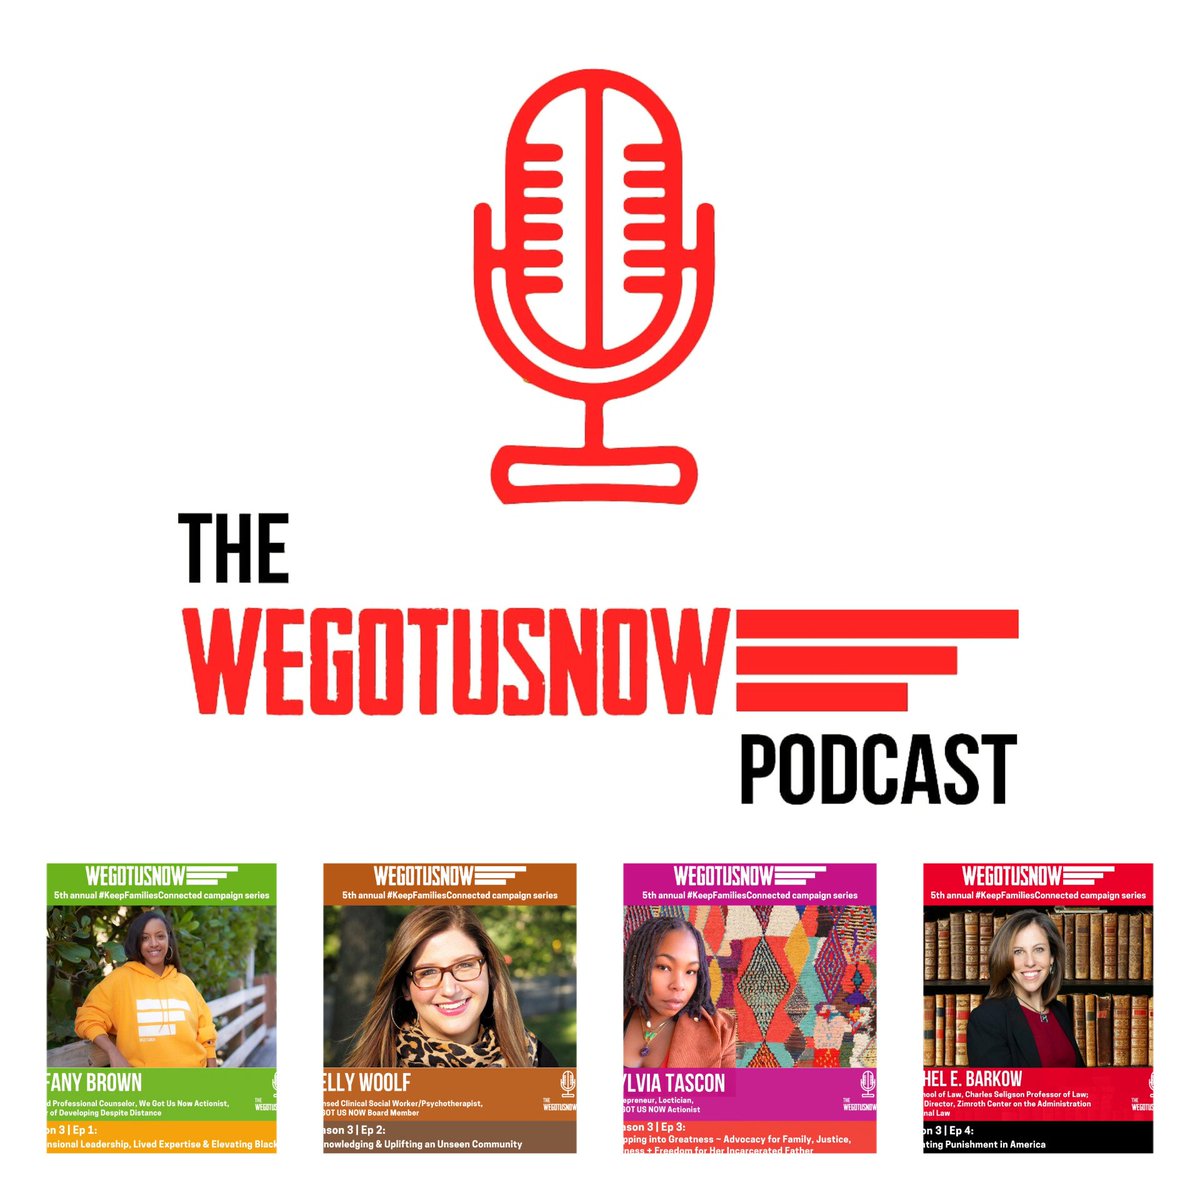 #WeGotUsNowPodcast
Streaming NOW on all podcast platforms...

#keepfamiliesconnectedseries
#10MillionInspired #WEGOTUSNOW 🌍